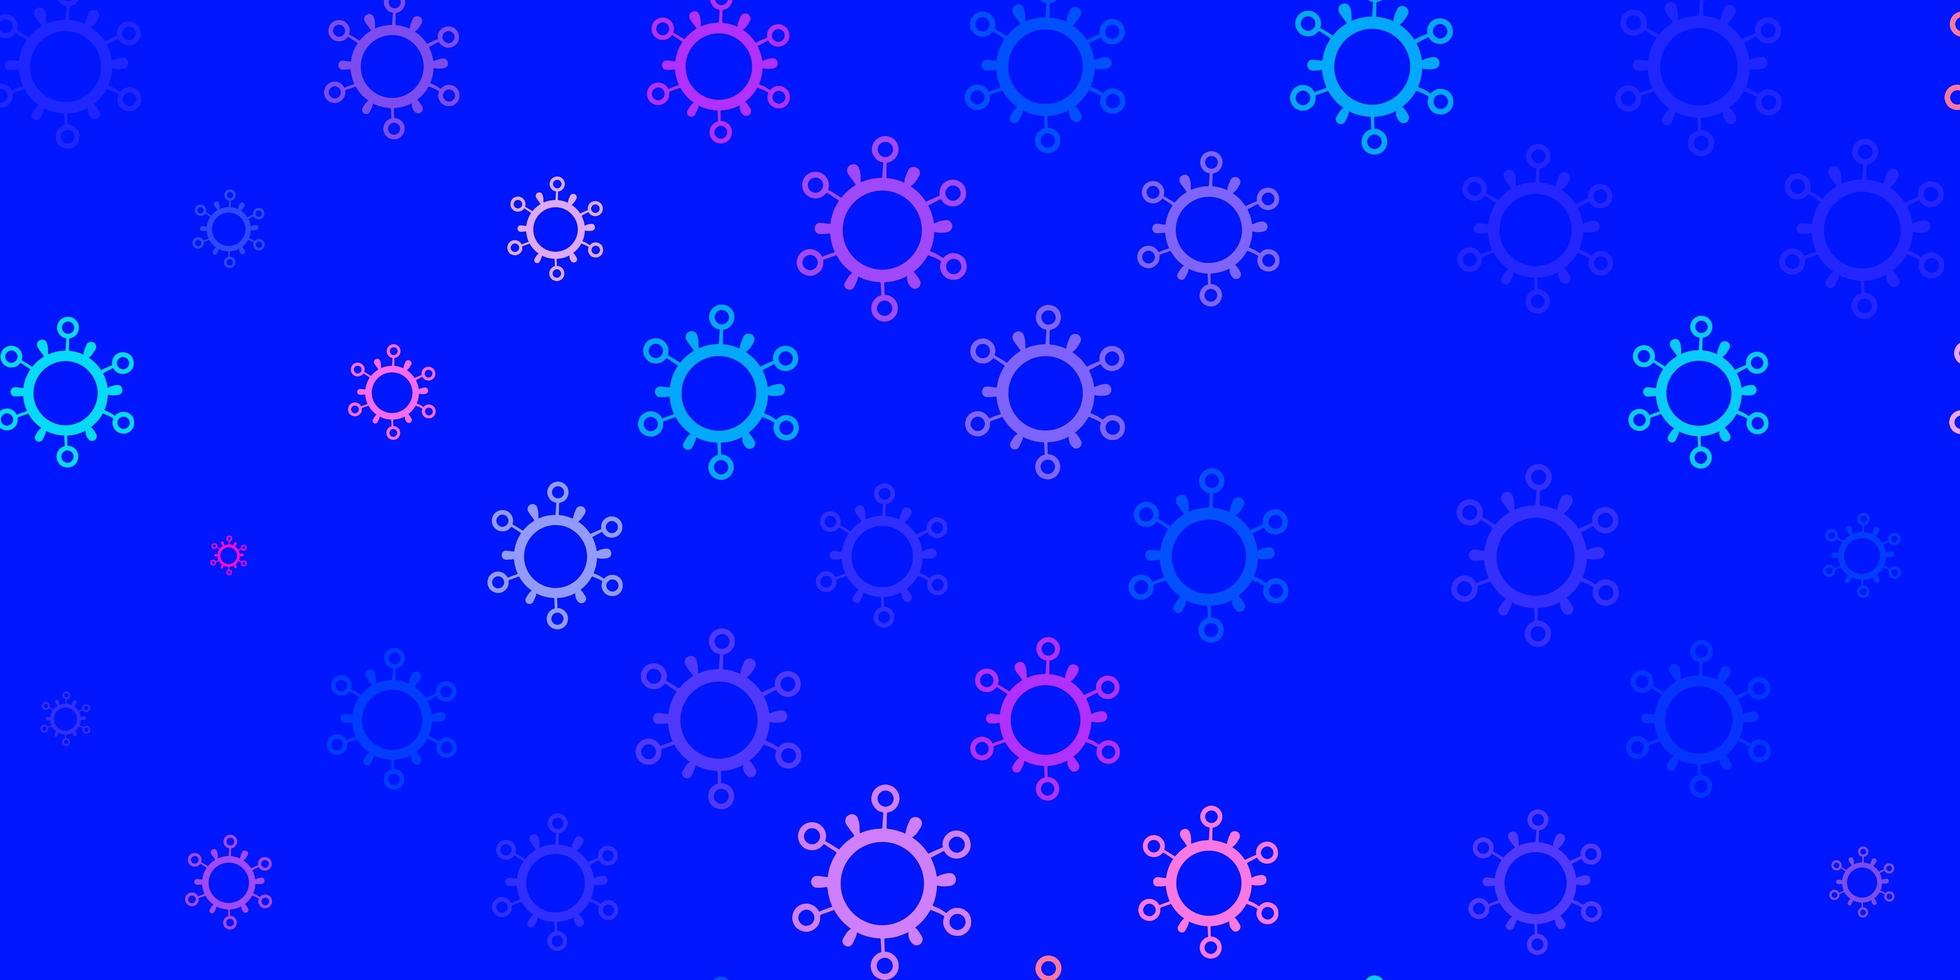 Light multicolor vector backdrop with virus symbols.